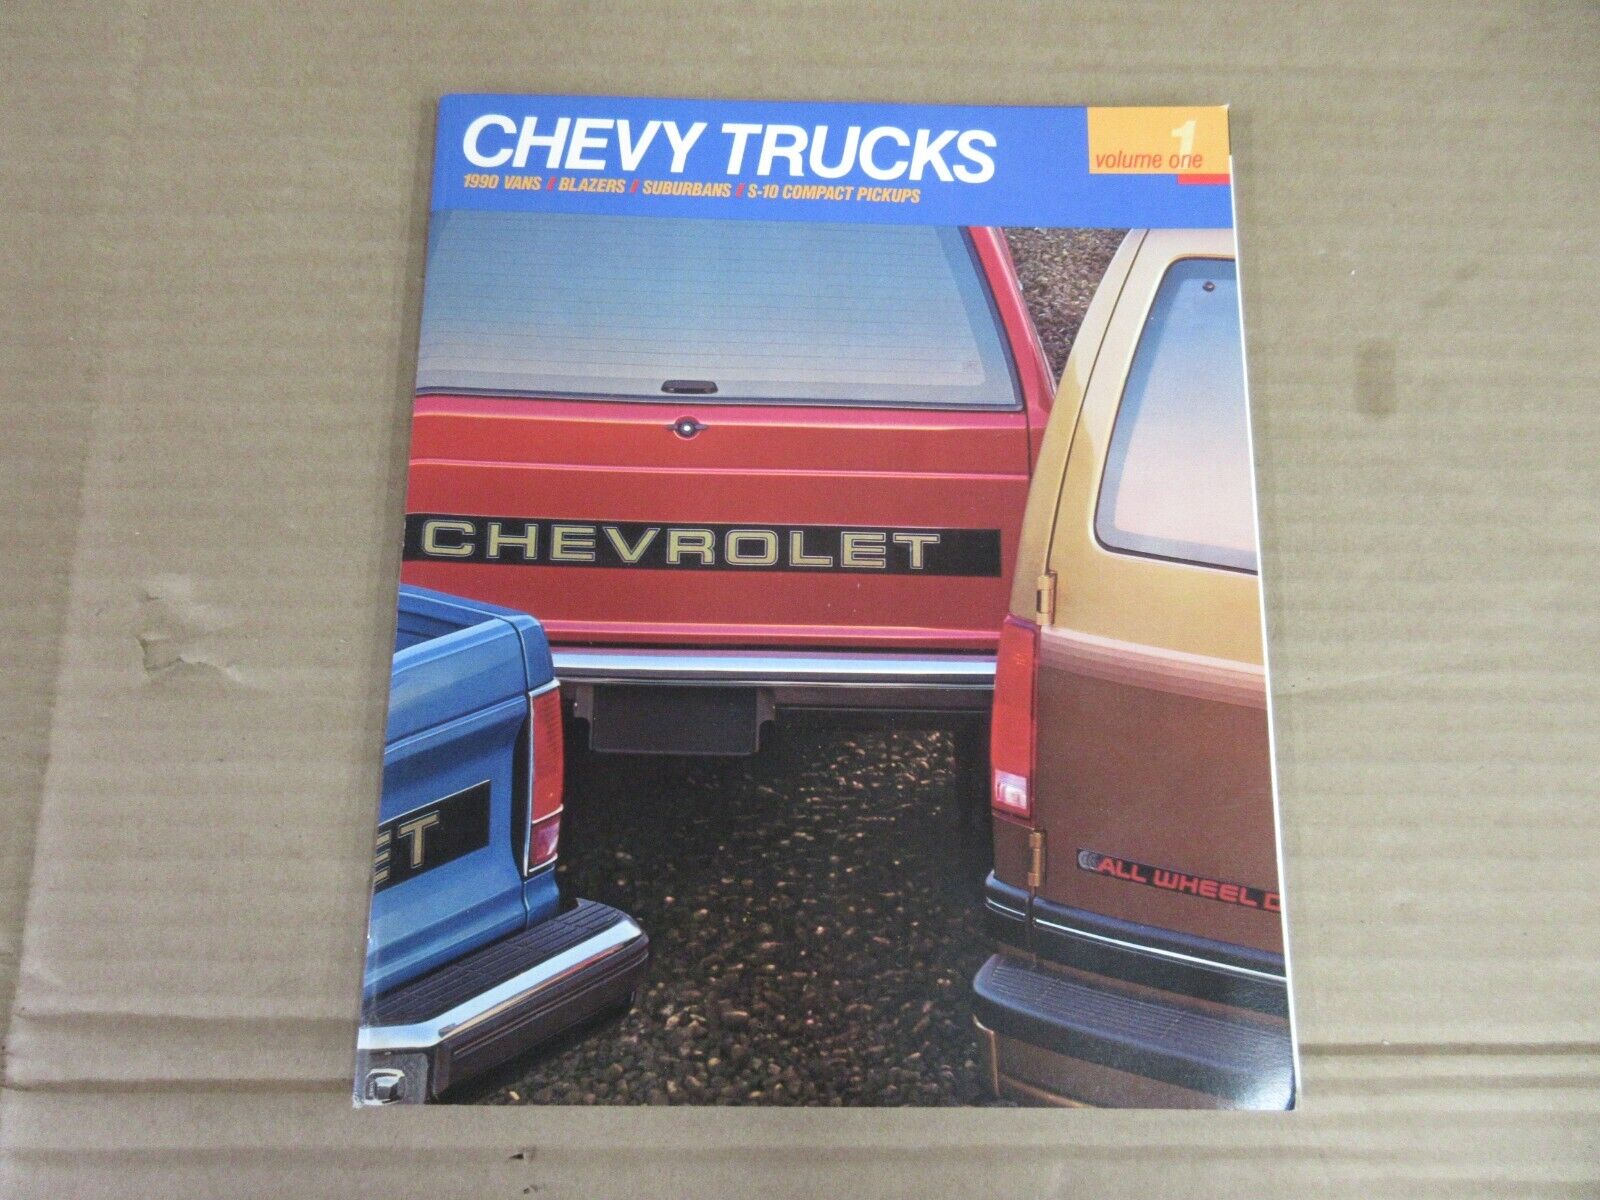 Vintage 1990 Chevrolet Trucks Vans Blazers Suburbans S-10 Vol 1   D8